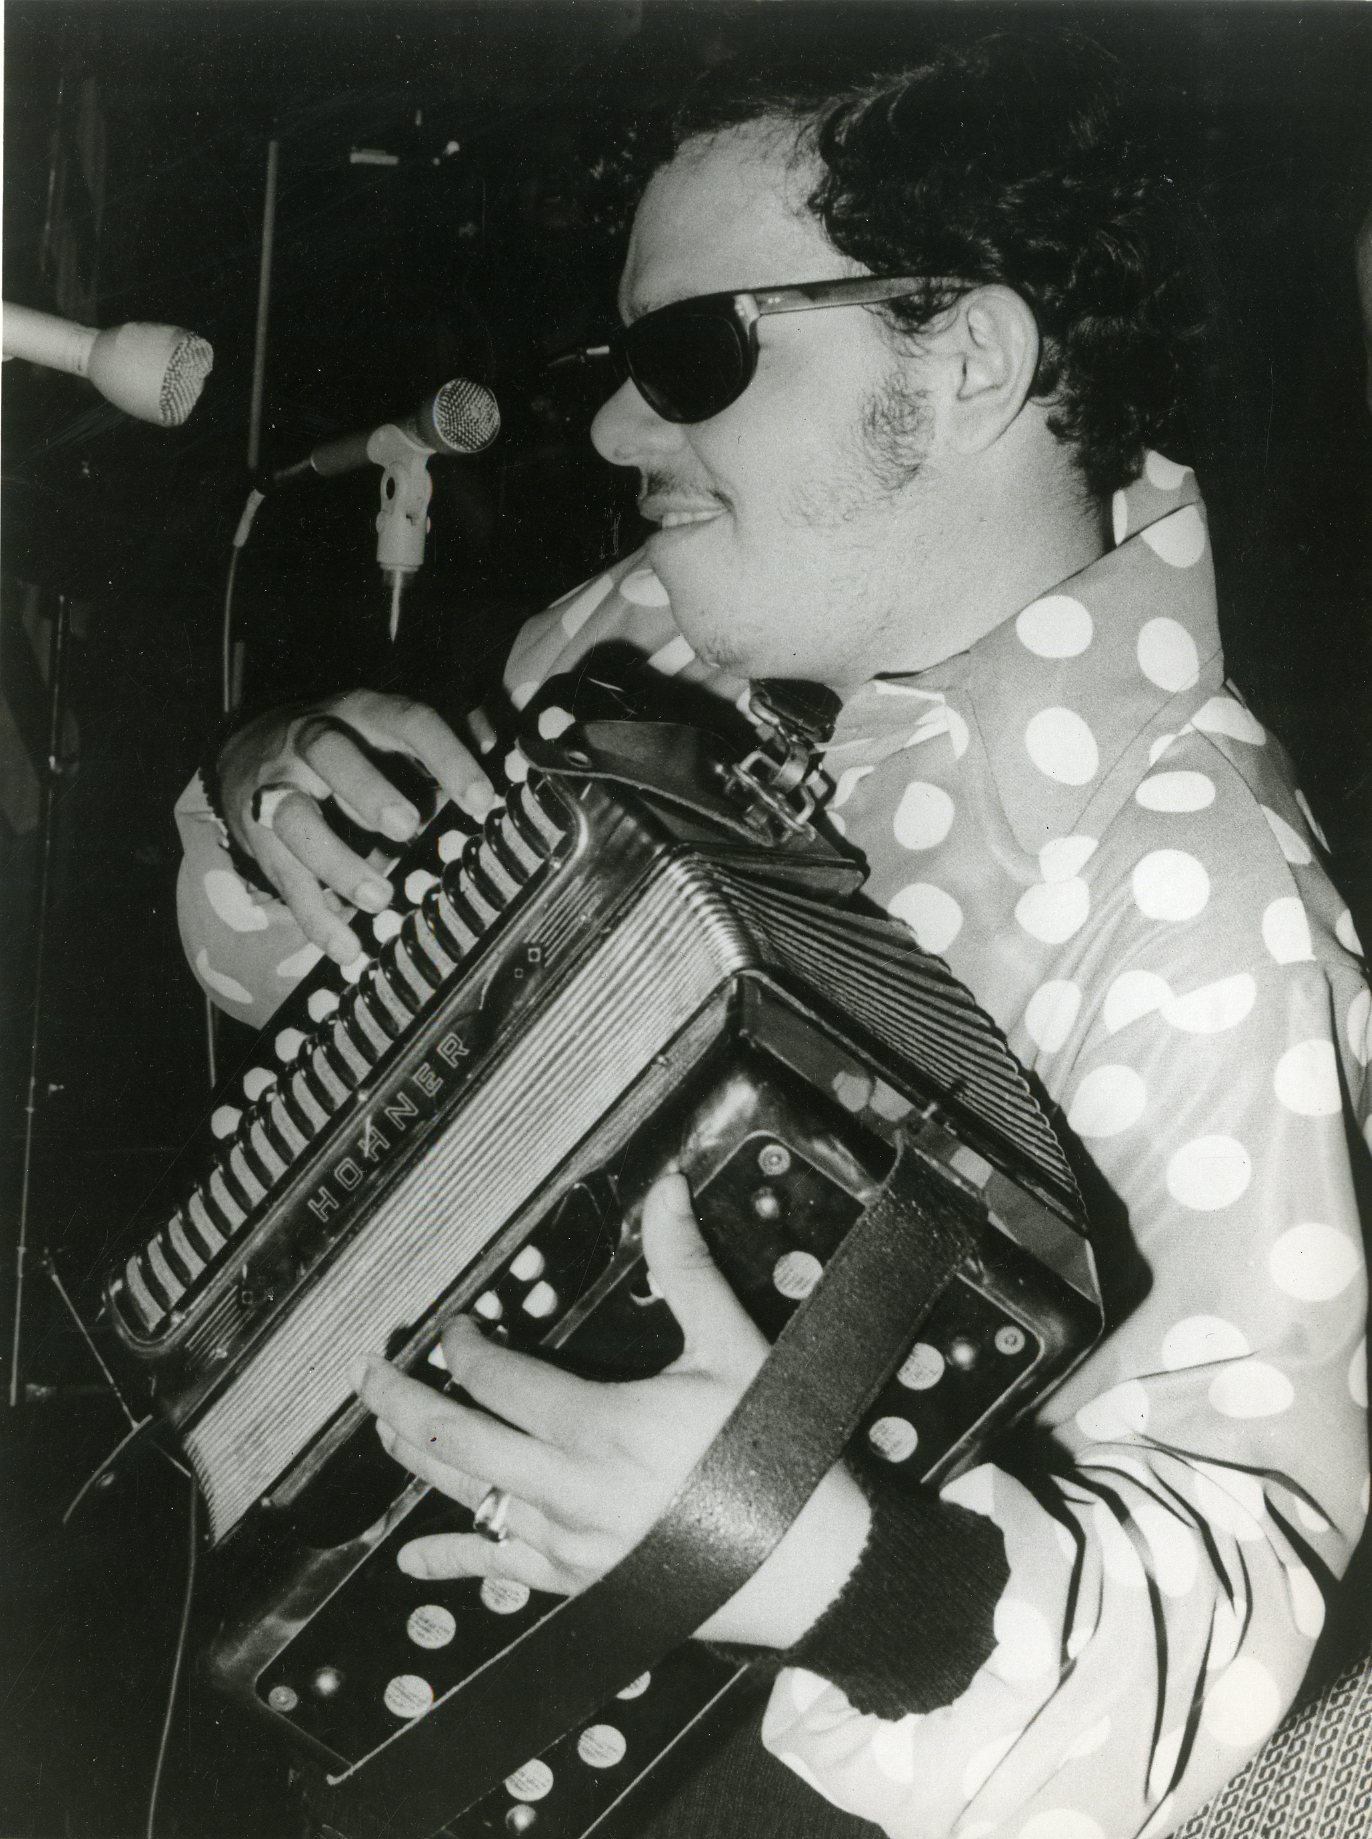 Bartolo Alvarado, “El Cieguito de Nagua” press photo, ca. 1970s